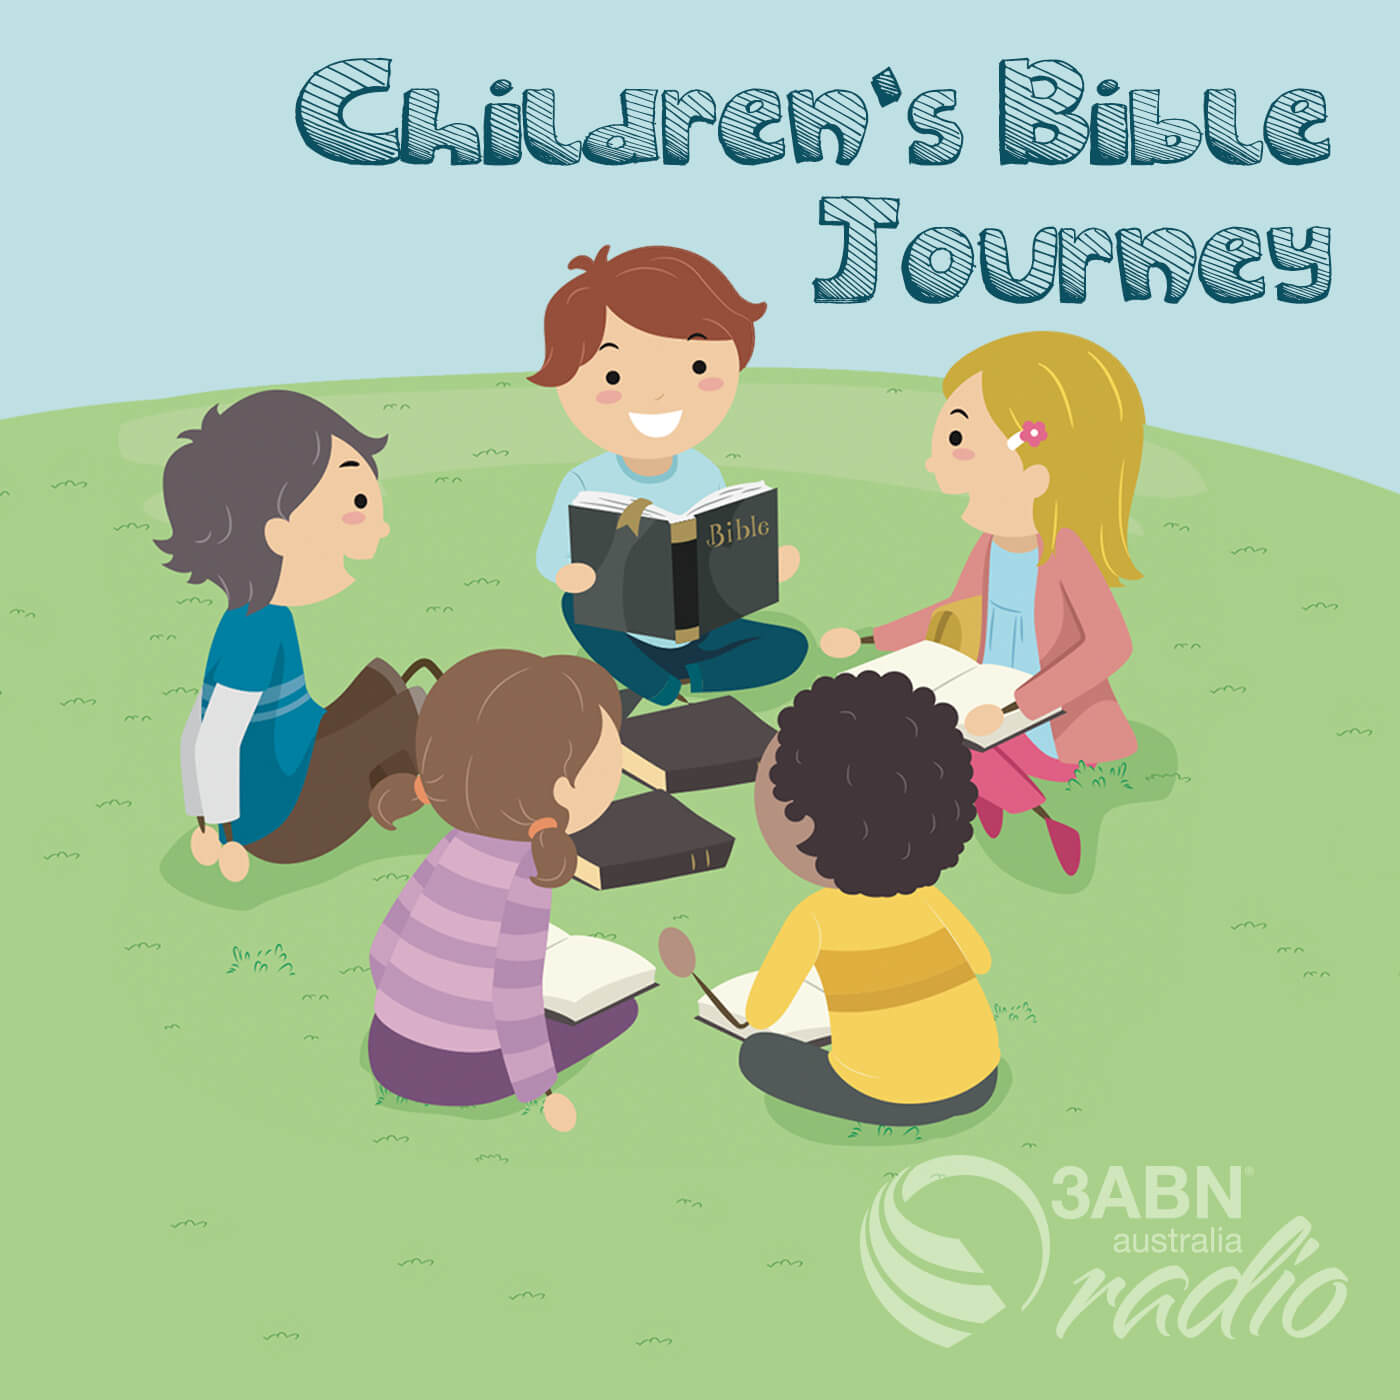 Children's Bible Journey - 2214